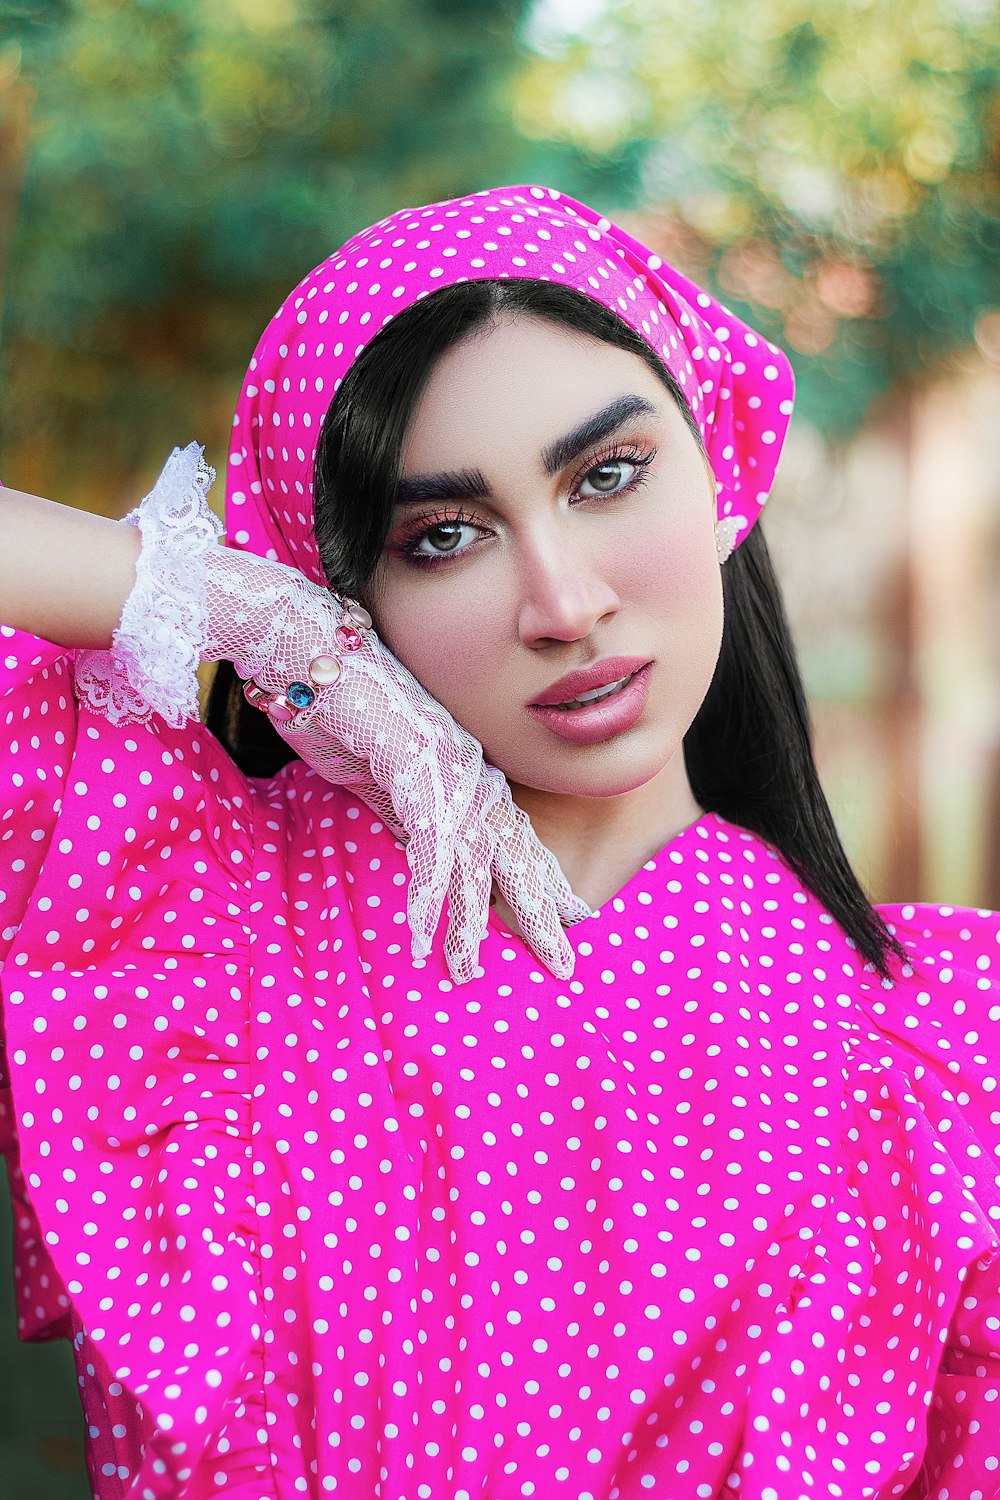 donna in hijab a pois rosa e bianco